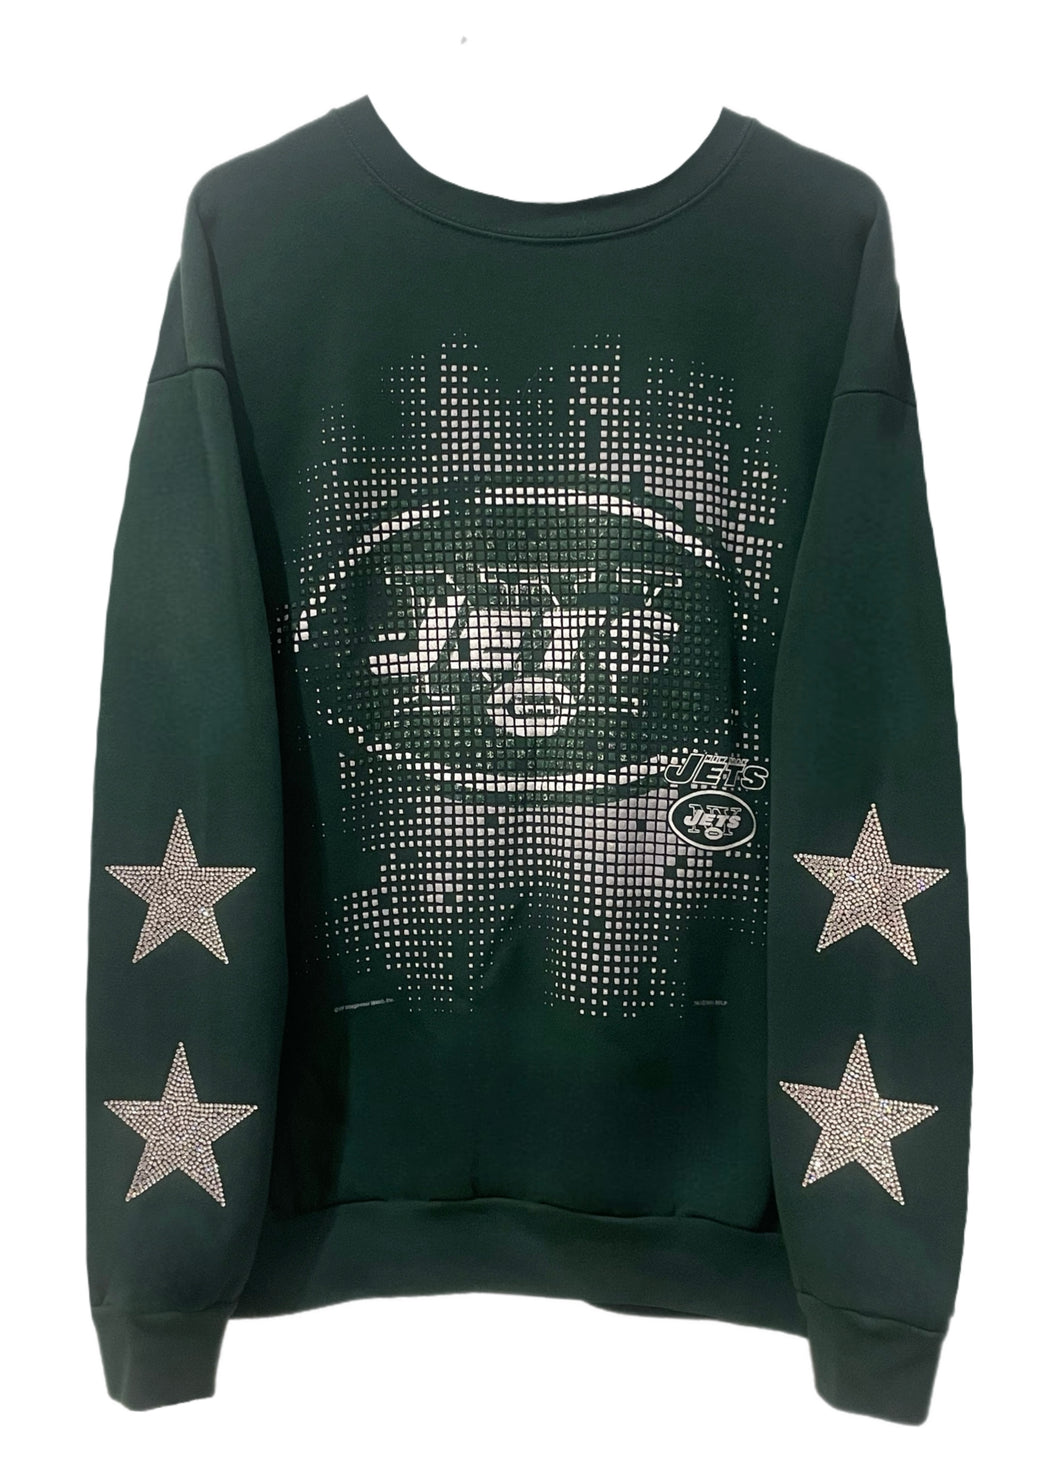 New York Jets, NFL One of a KIND Vintage Sweatshirt with Crystal Star Design